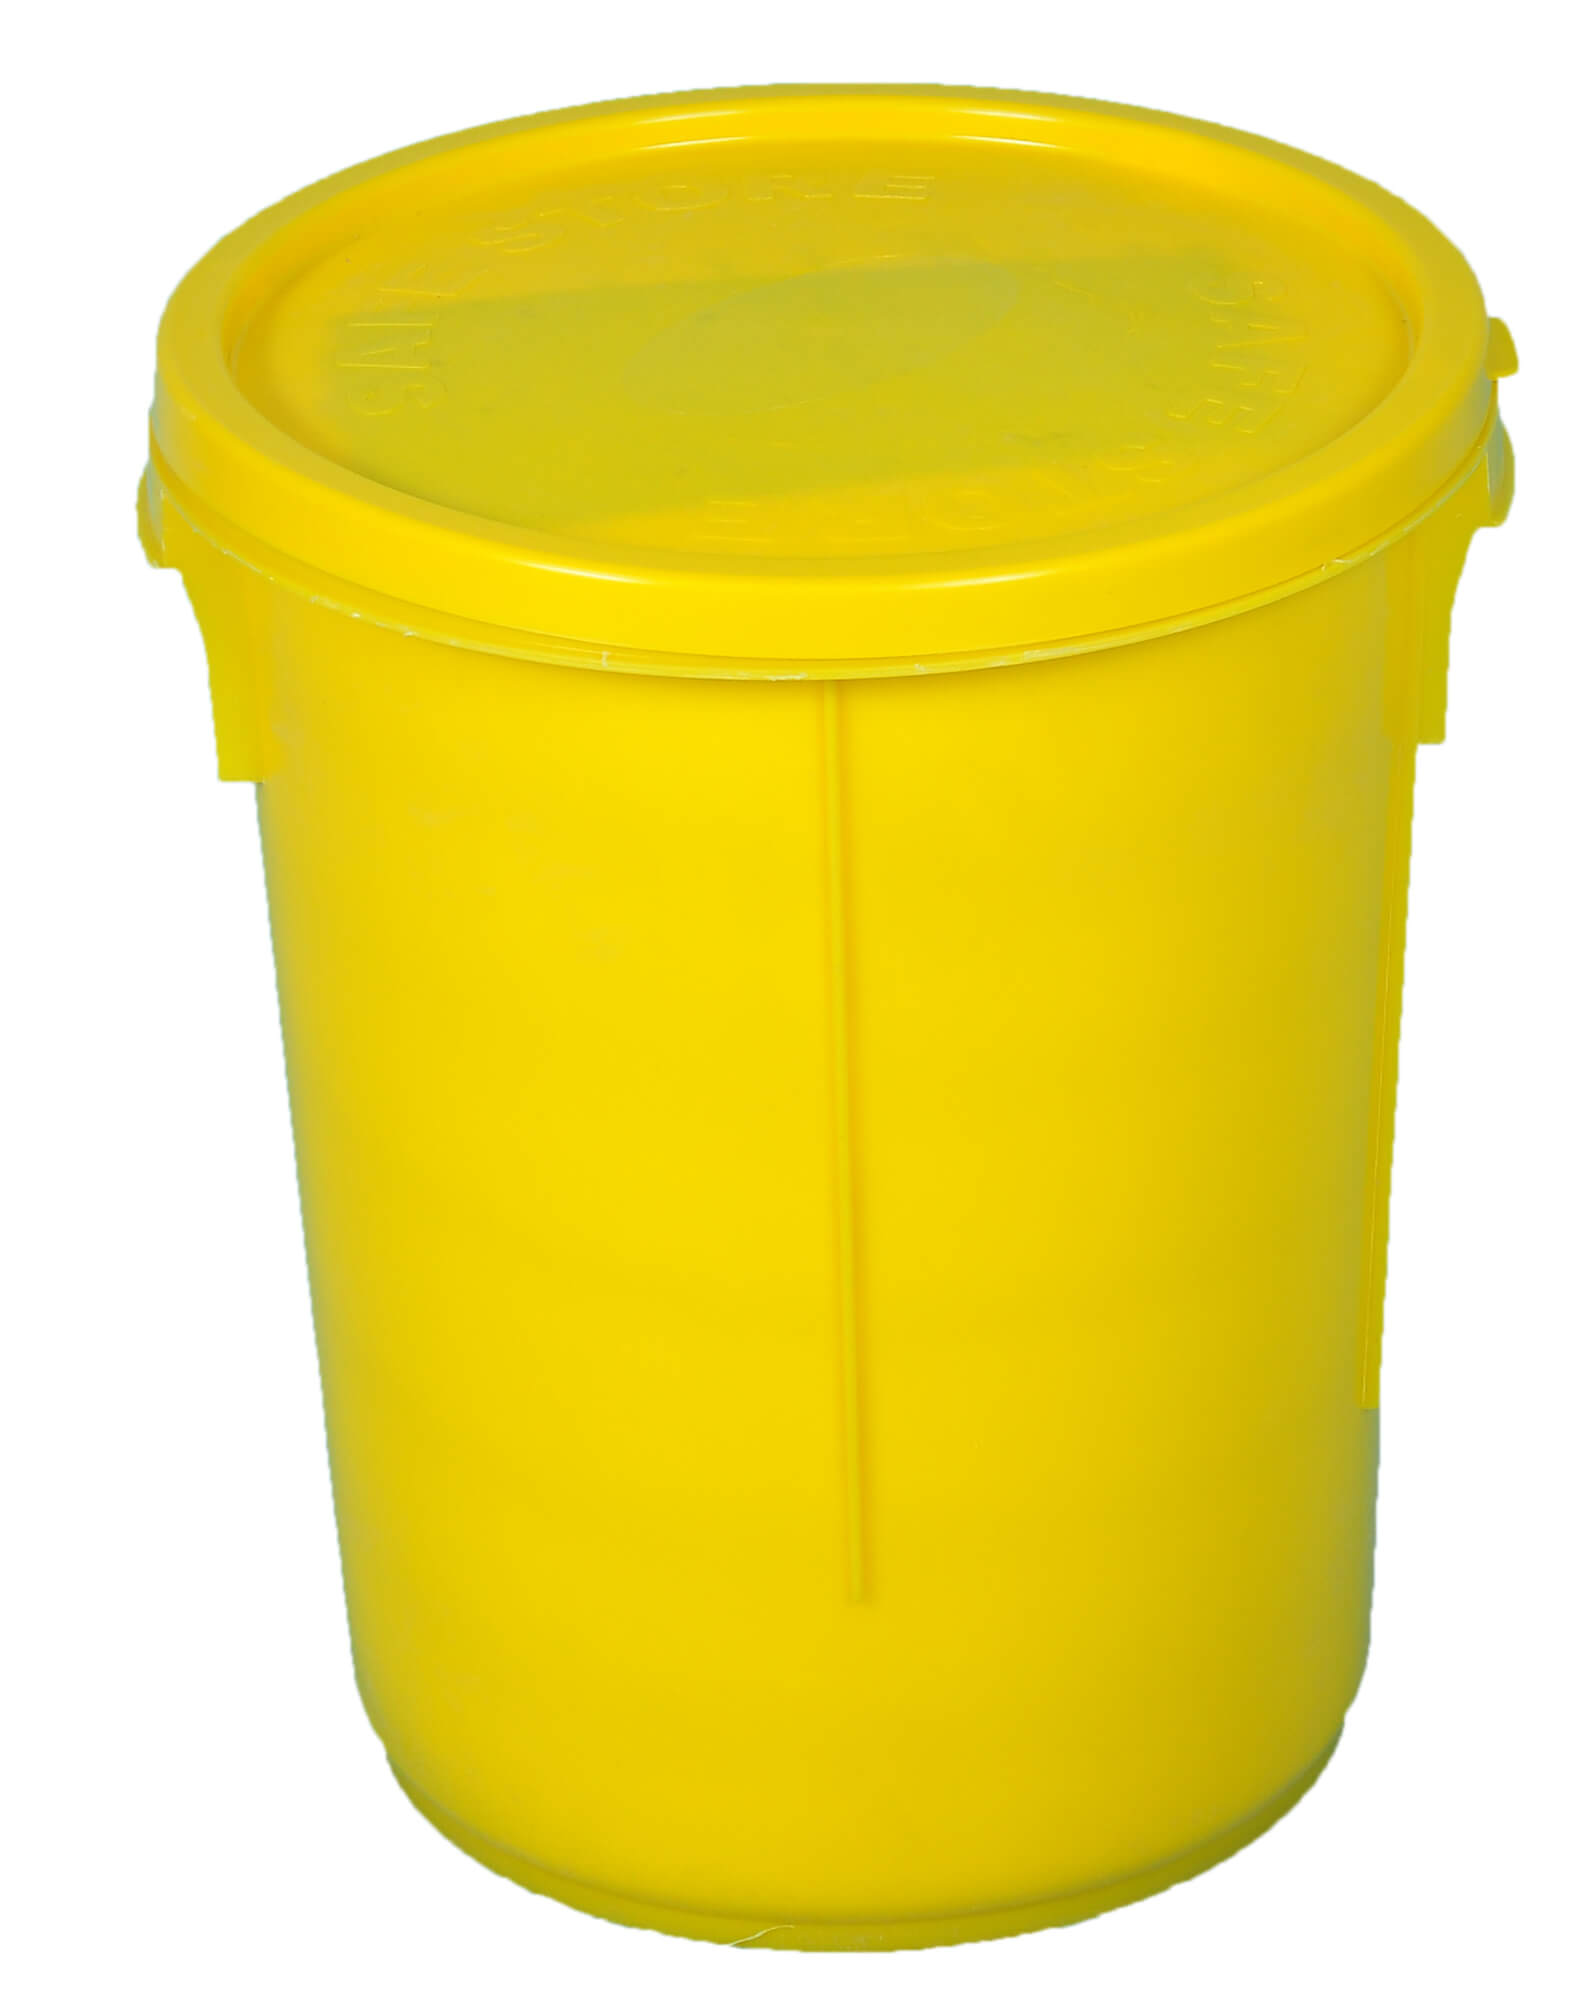 Empty Plastic Drum and Lid (Yellow)